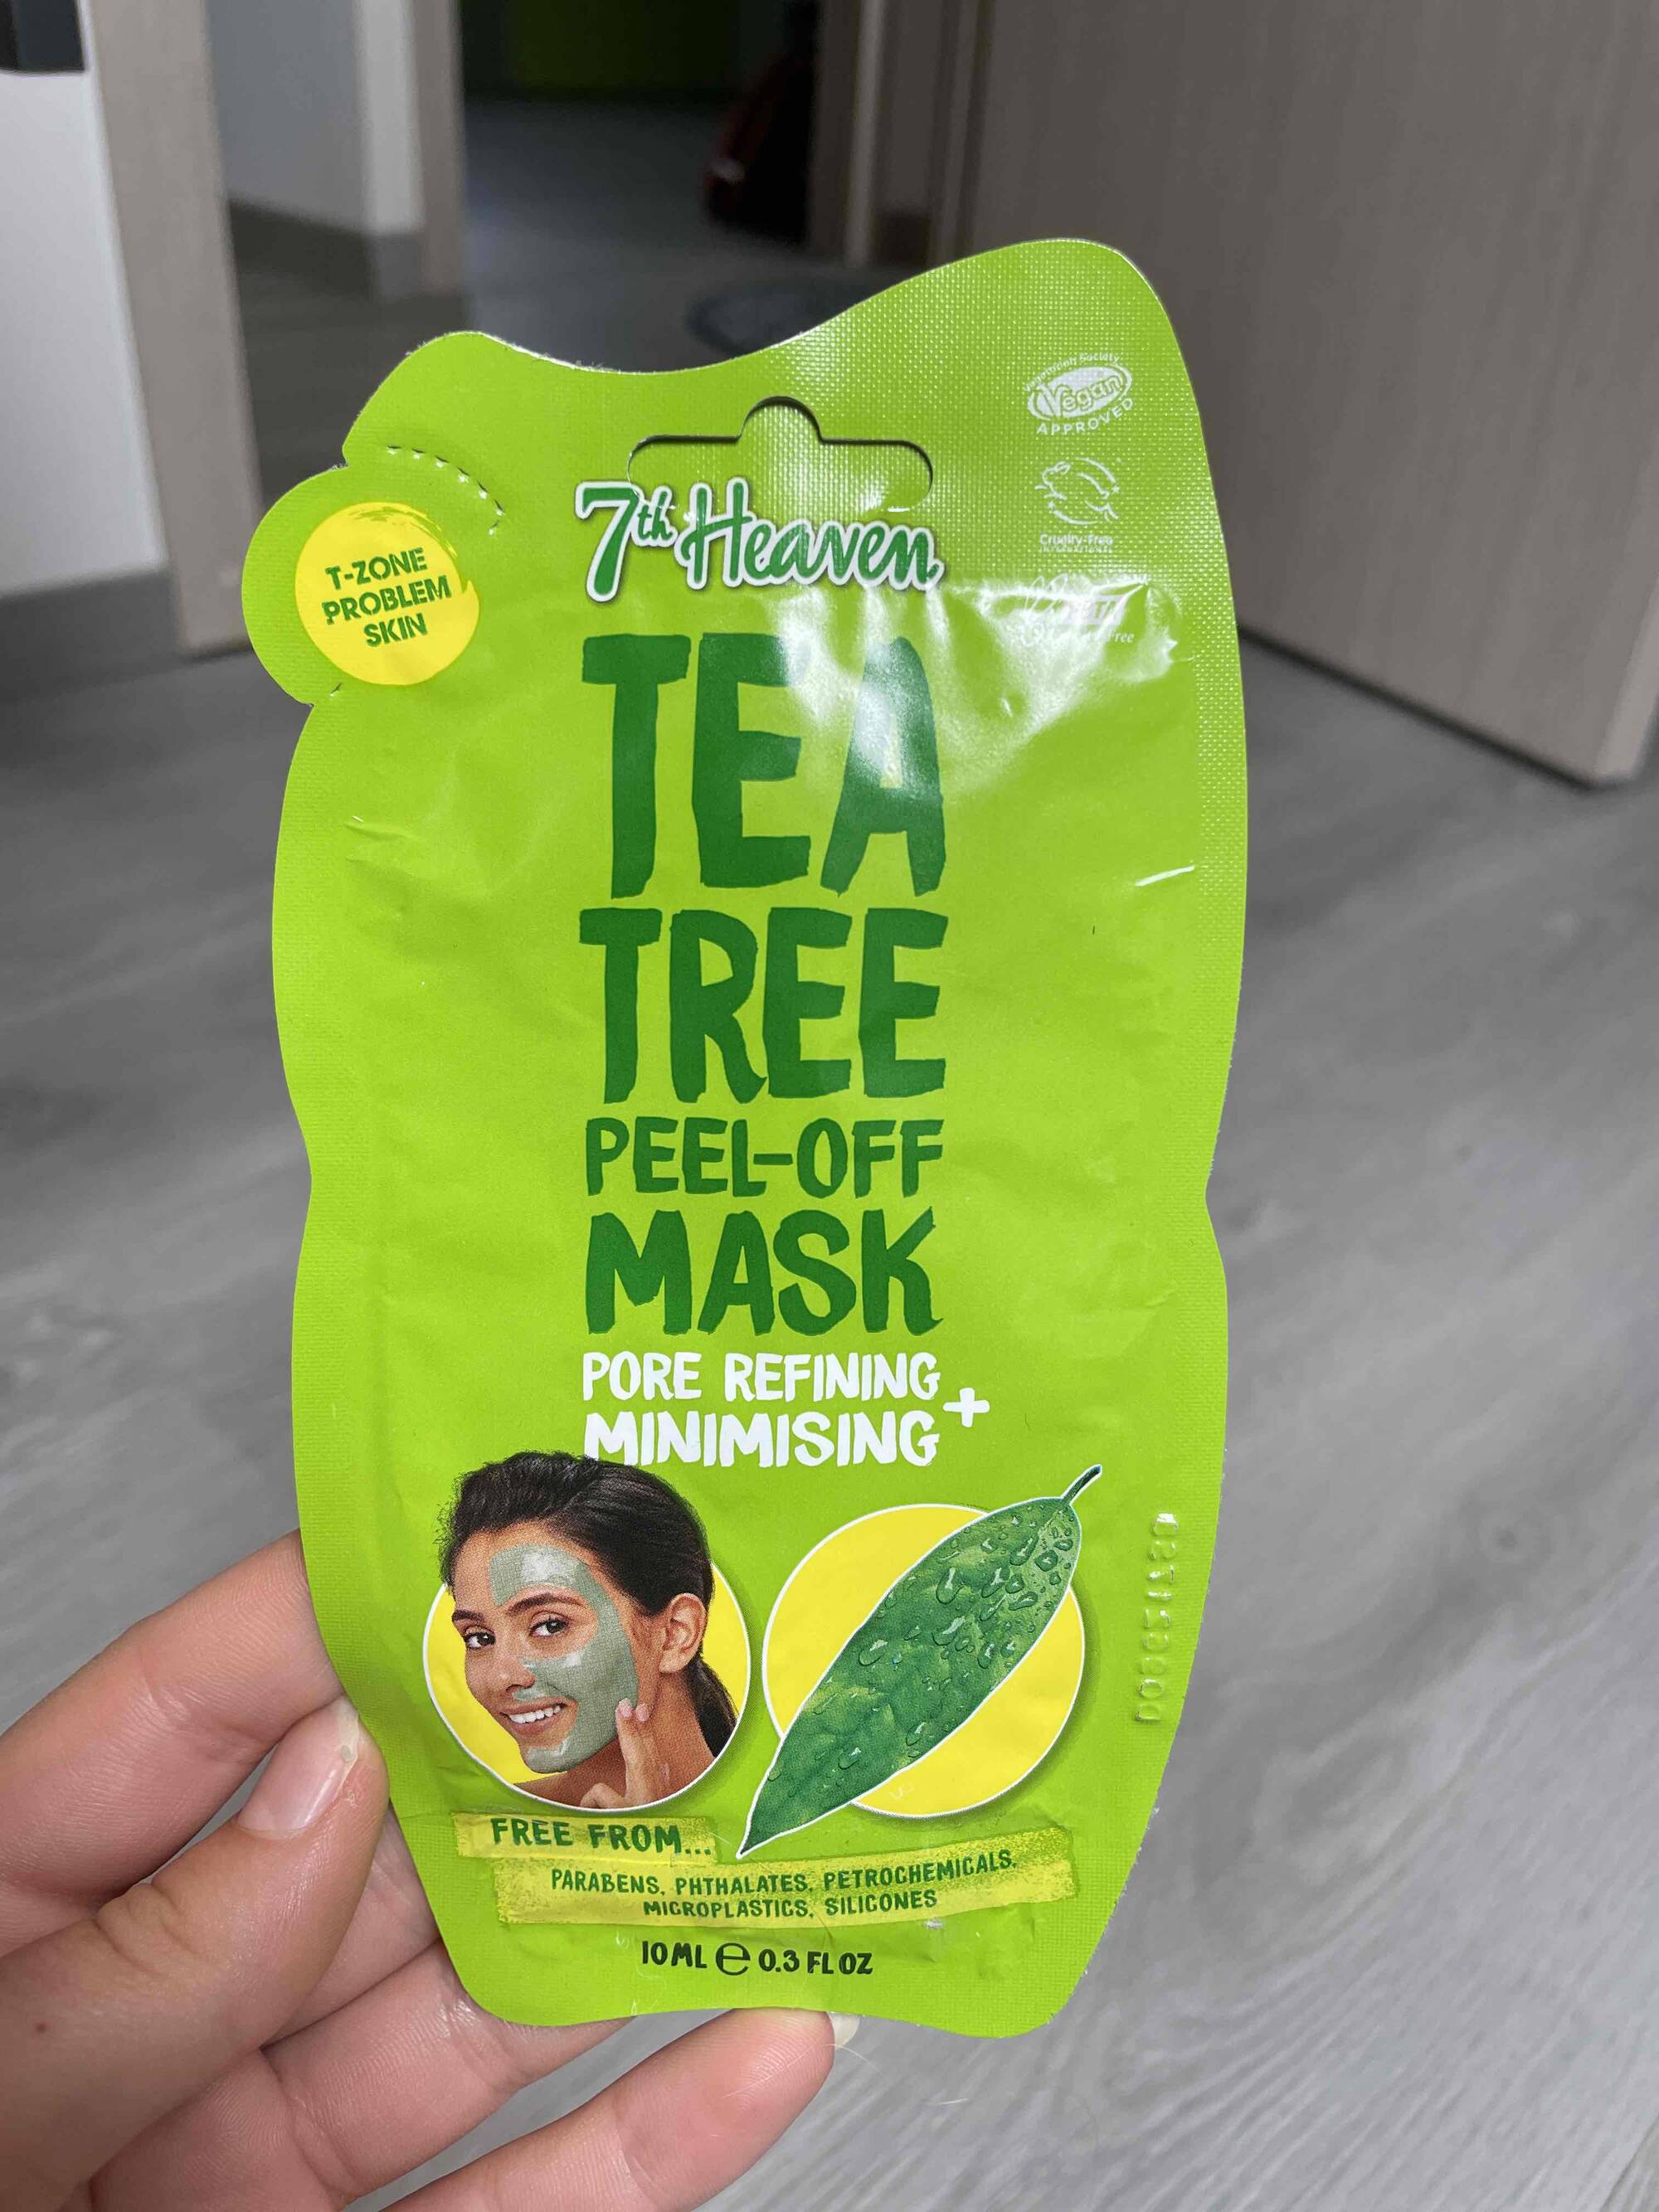 7TH HEAVEN - Tea tree peel-off mask